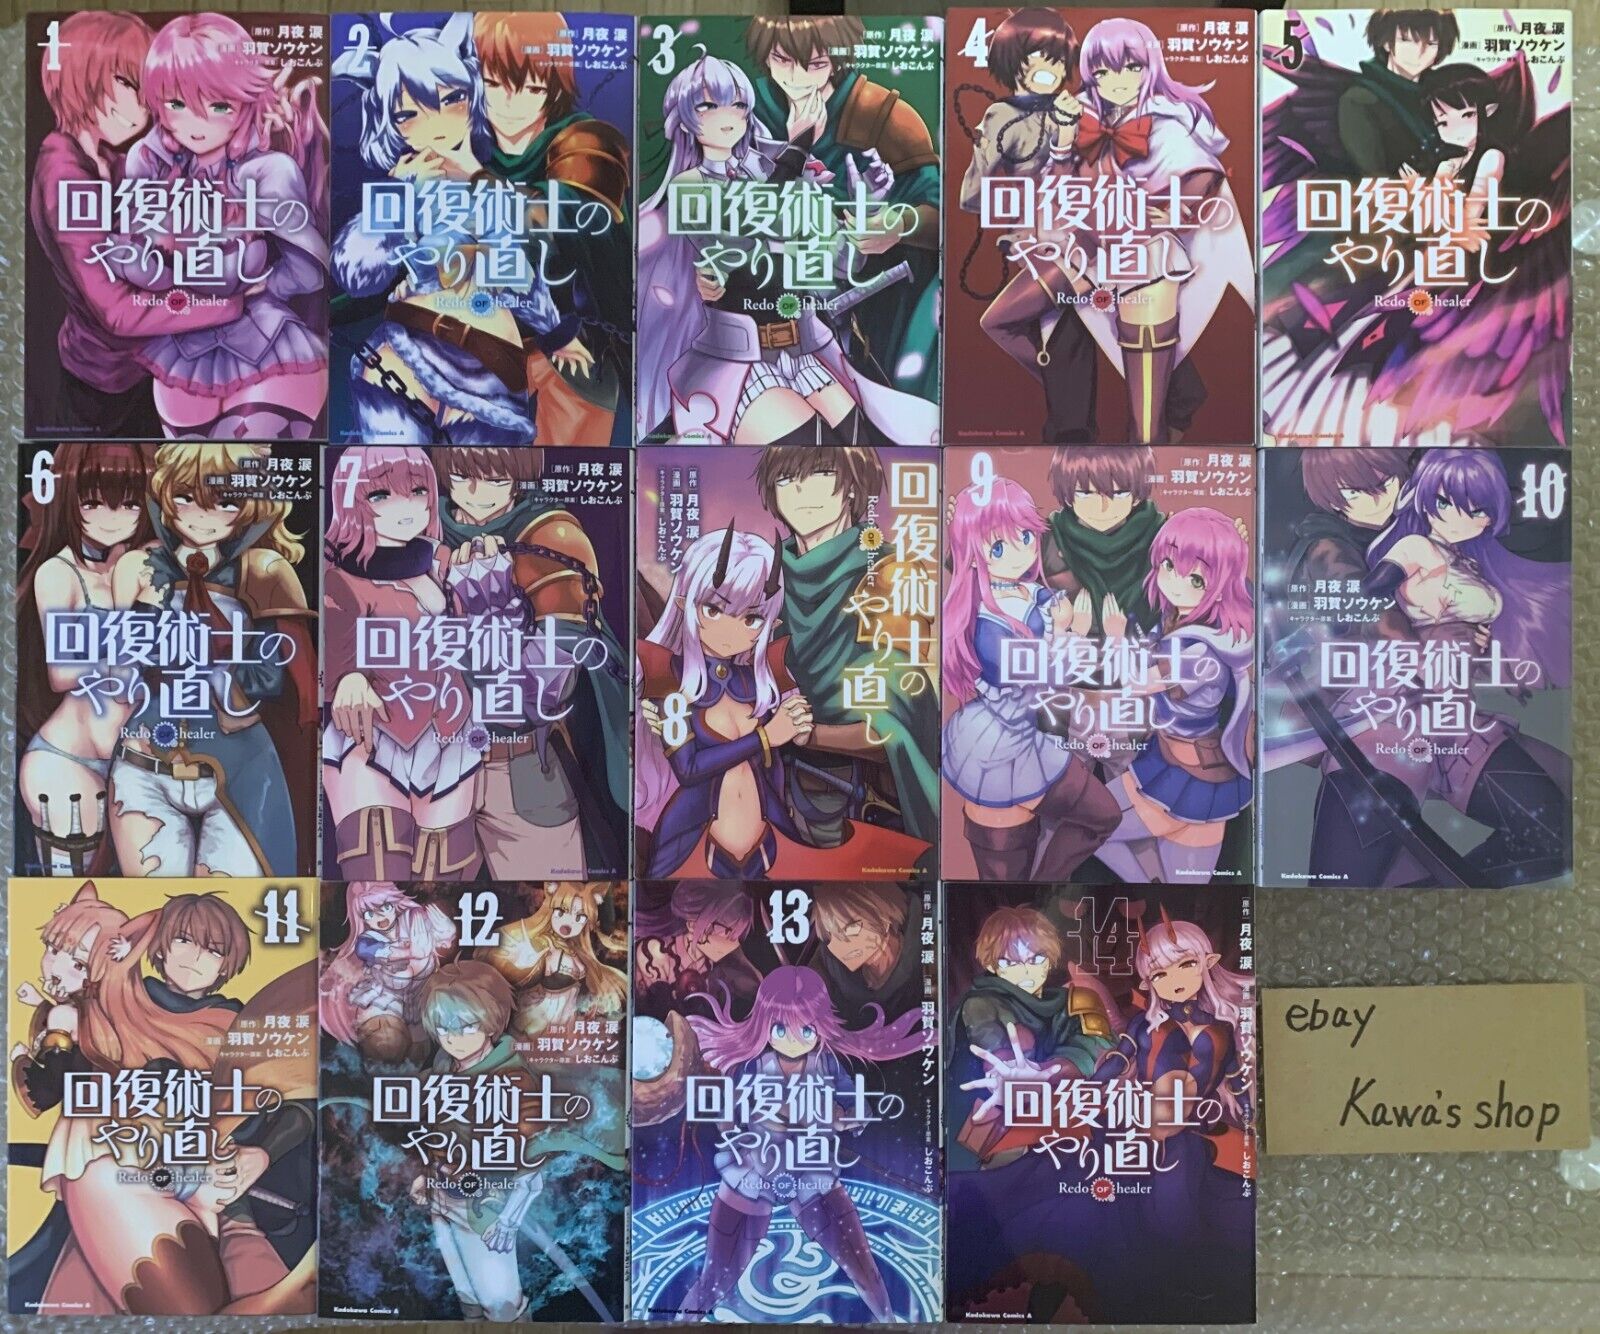 Kaifuku Jutsushi no Yarinaoshi Redo of Healer Vol.1-14 Latest full set Manga